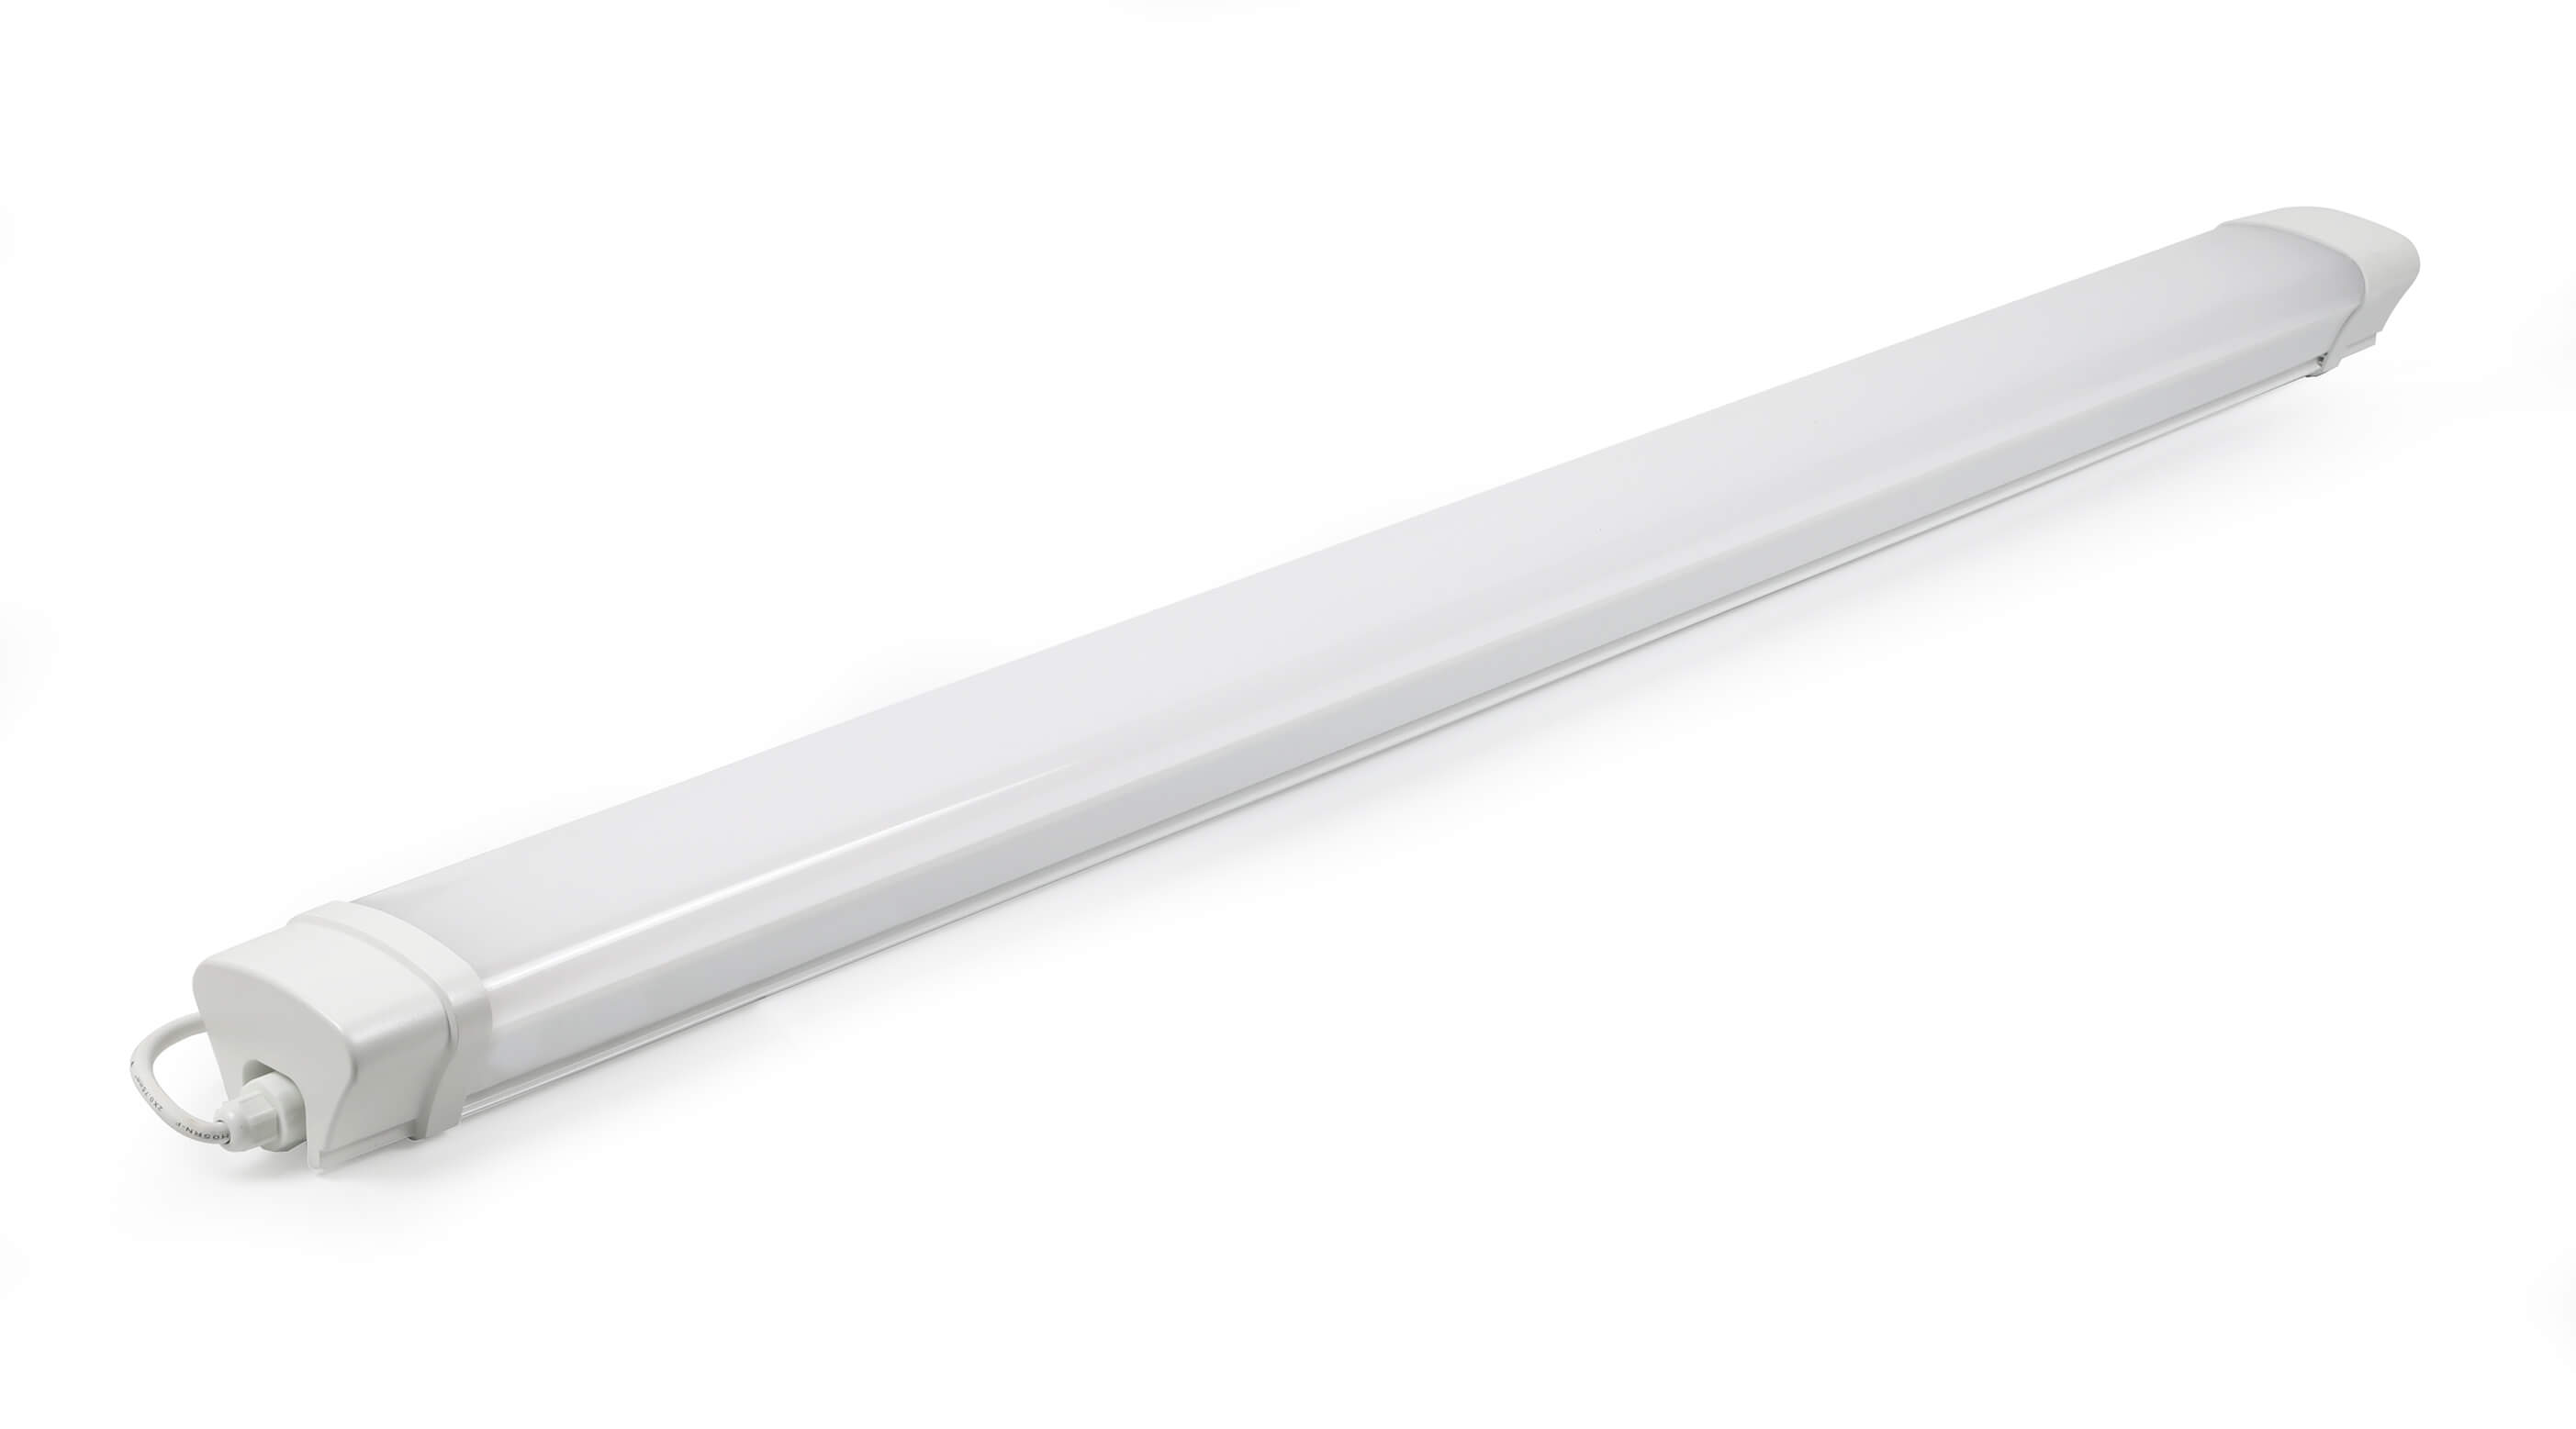 LHT055 Waterproof LED Linea luminaire